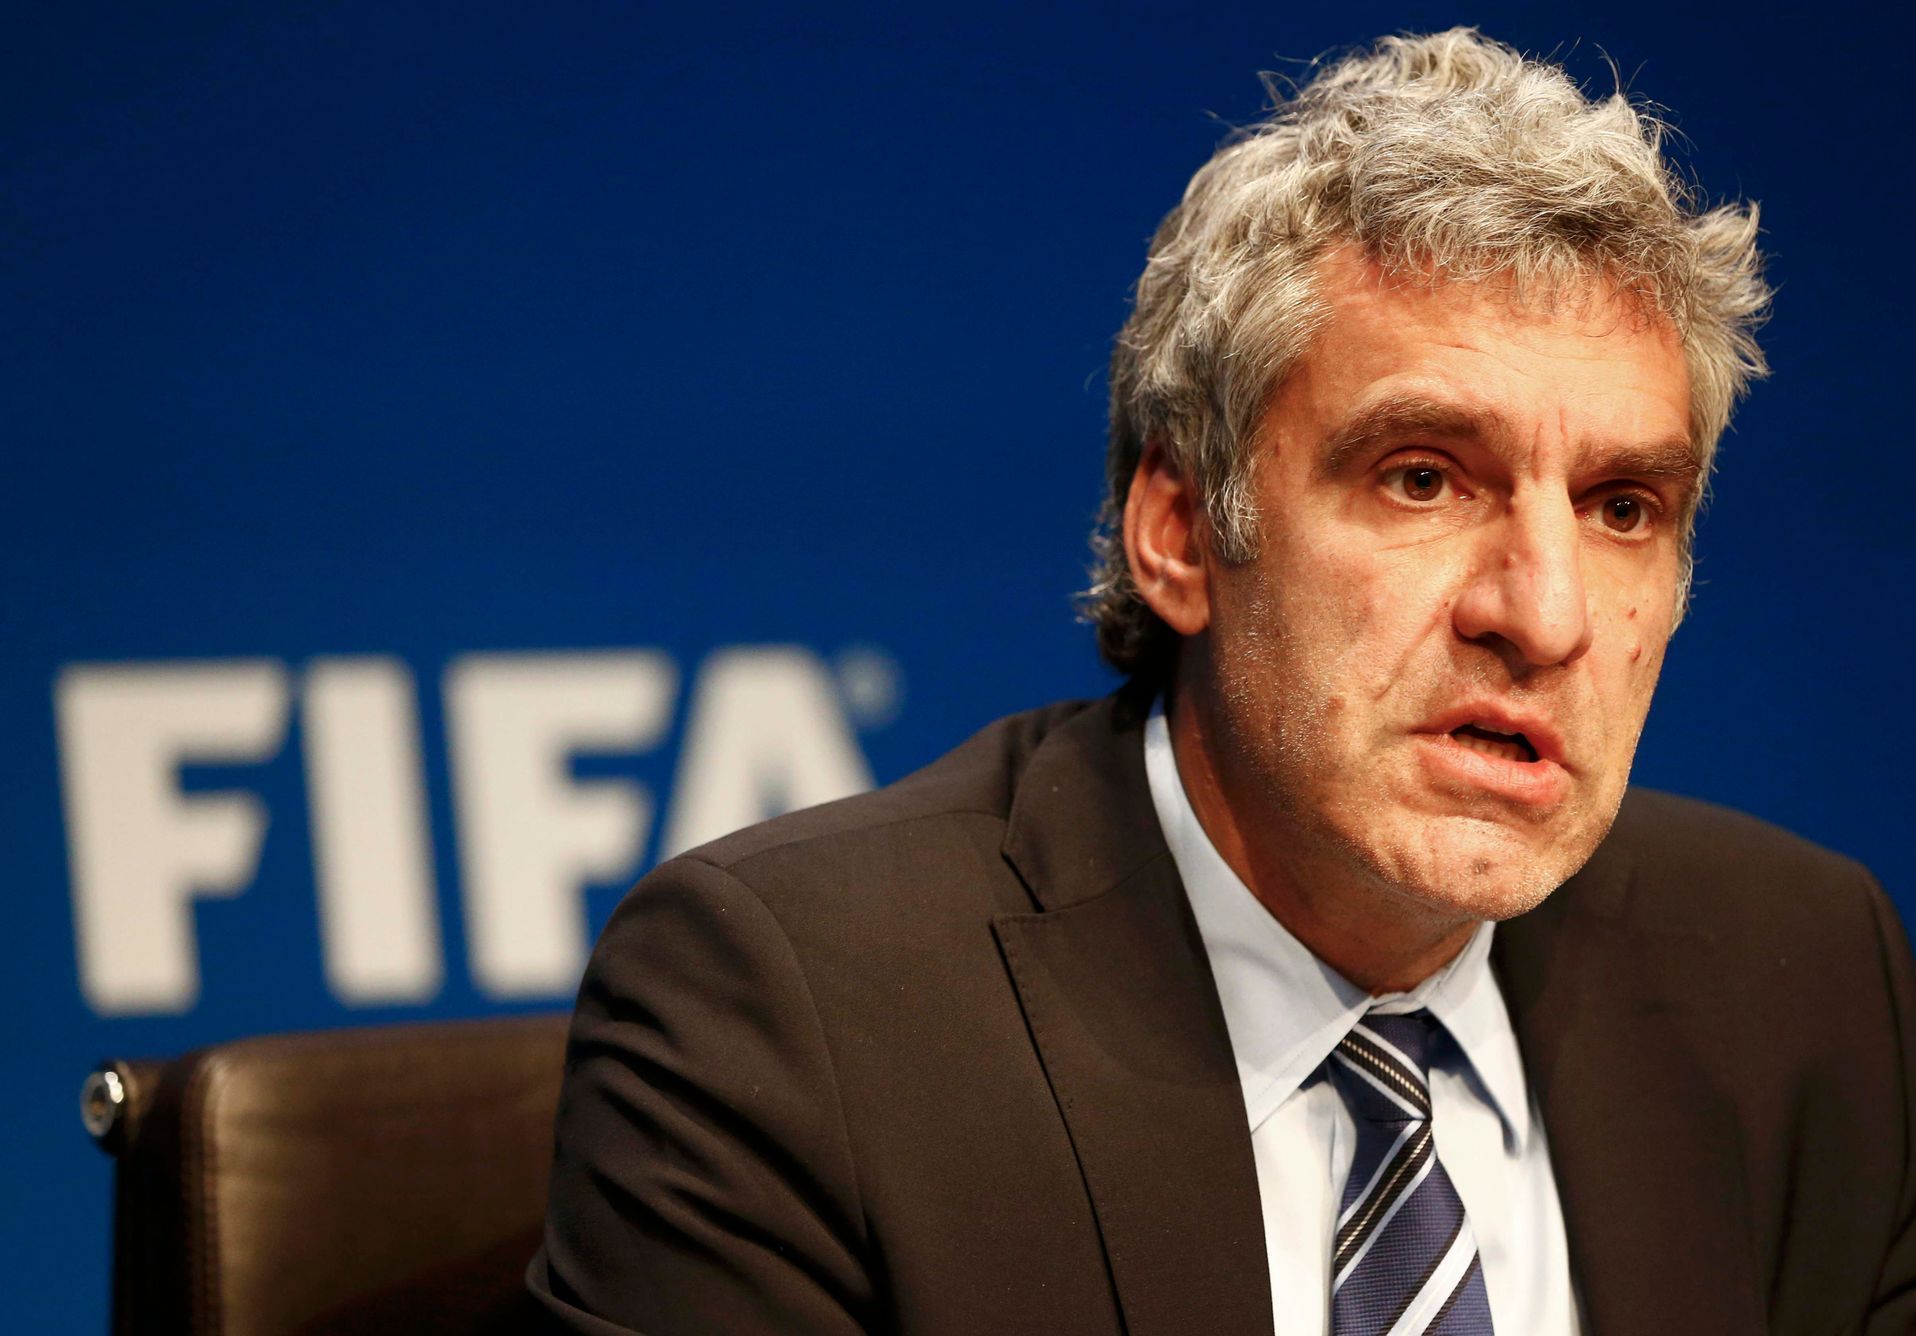 Walter De Gregorio, tiskový mluvčí FIFA